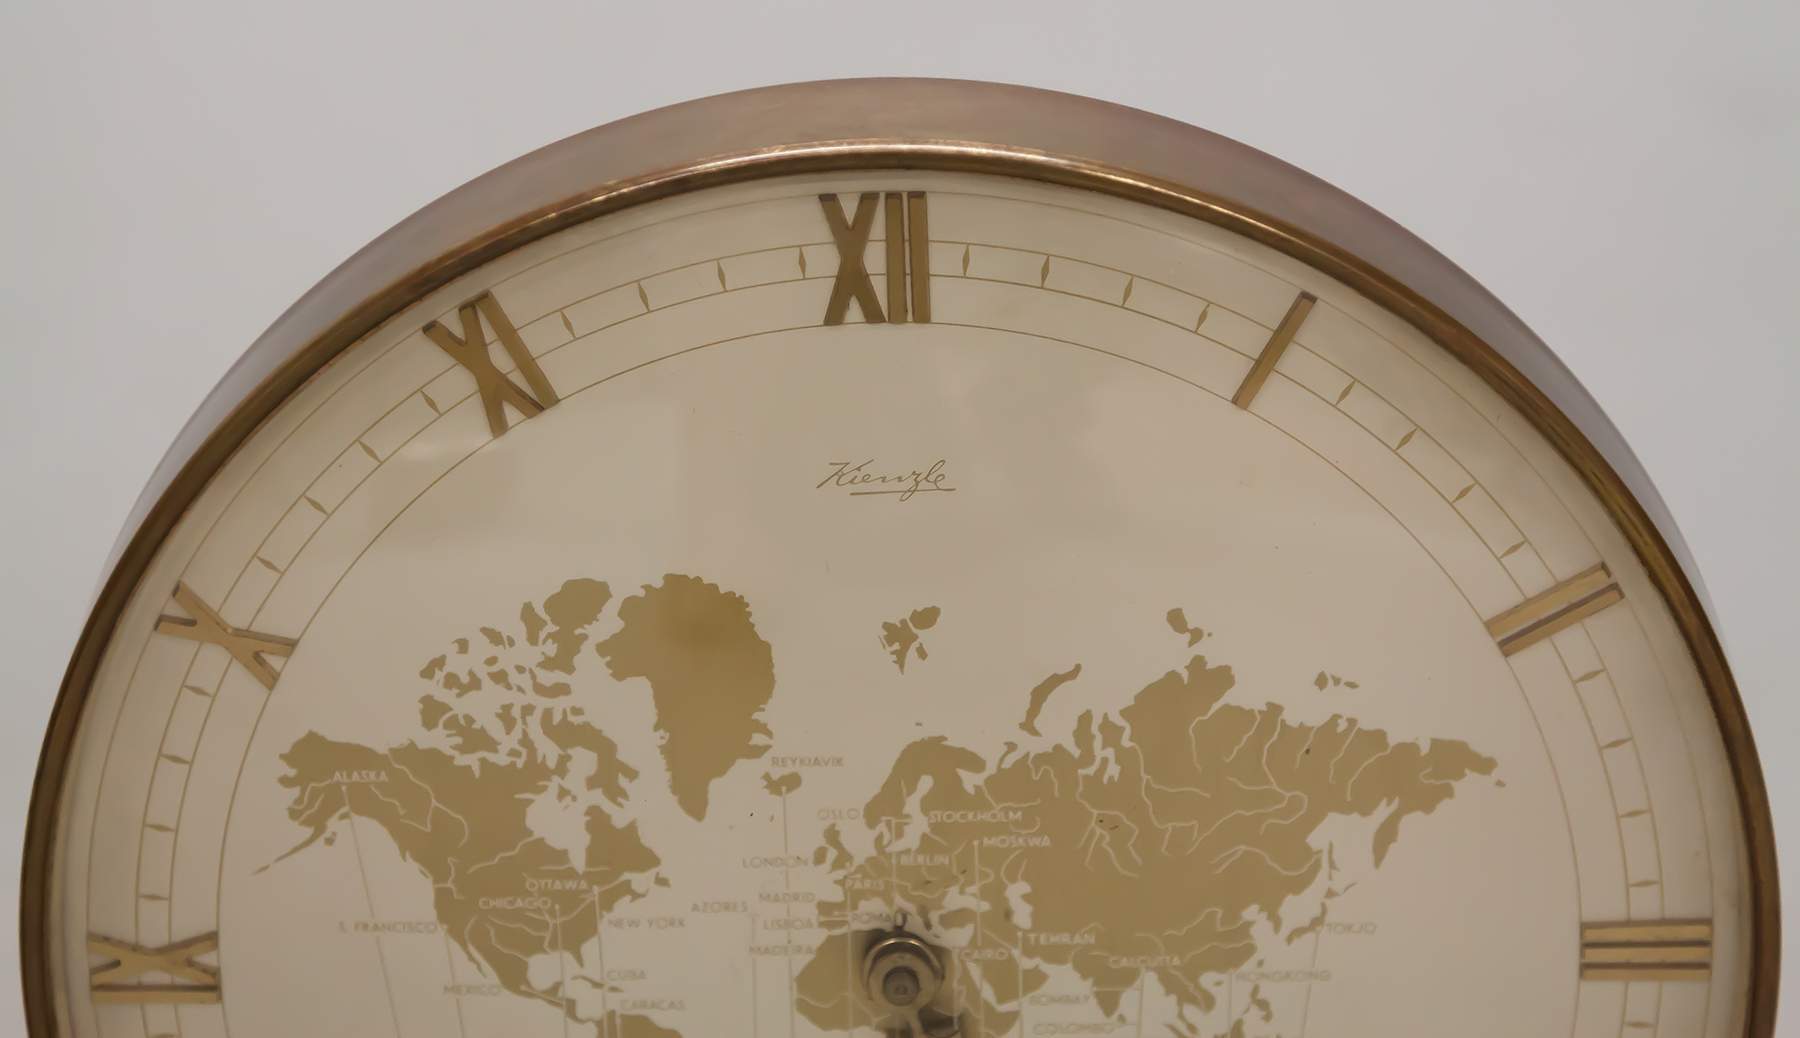 2 Mid-Century German Brass Table Clocks